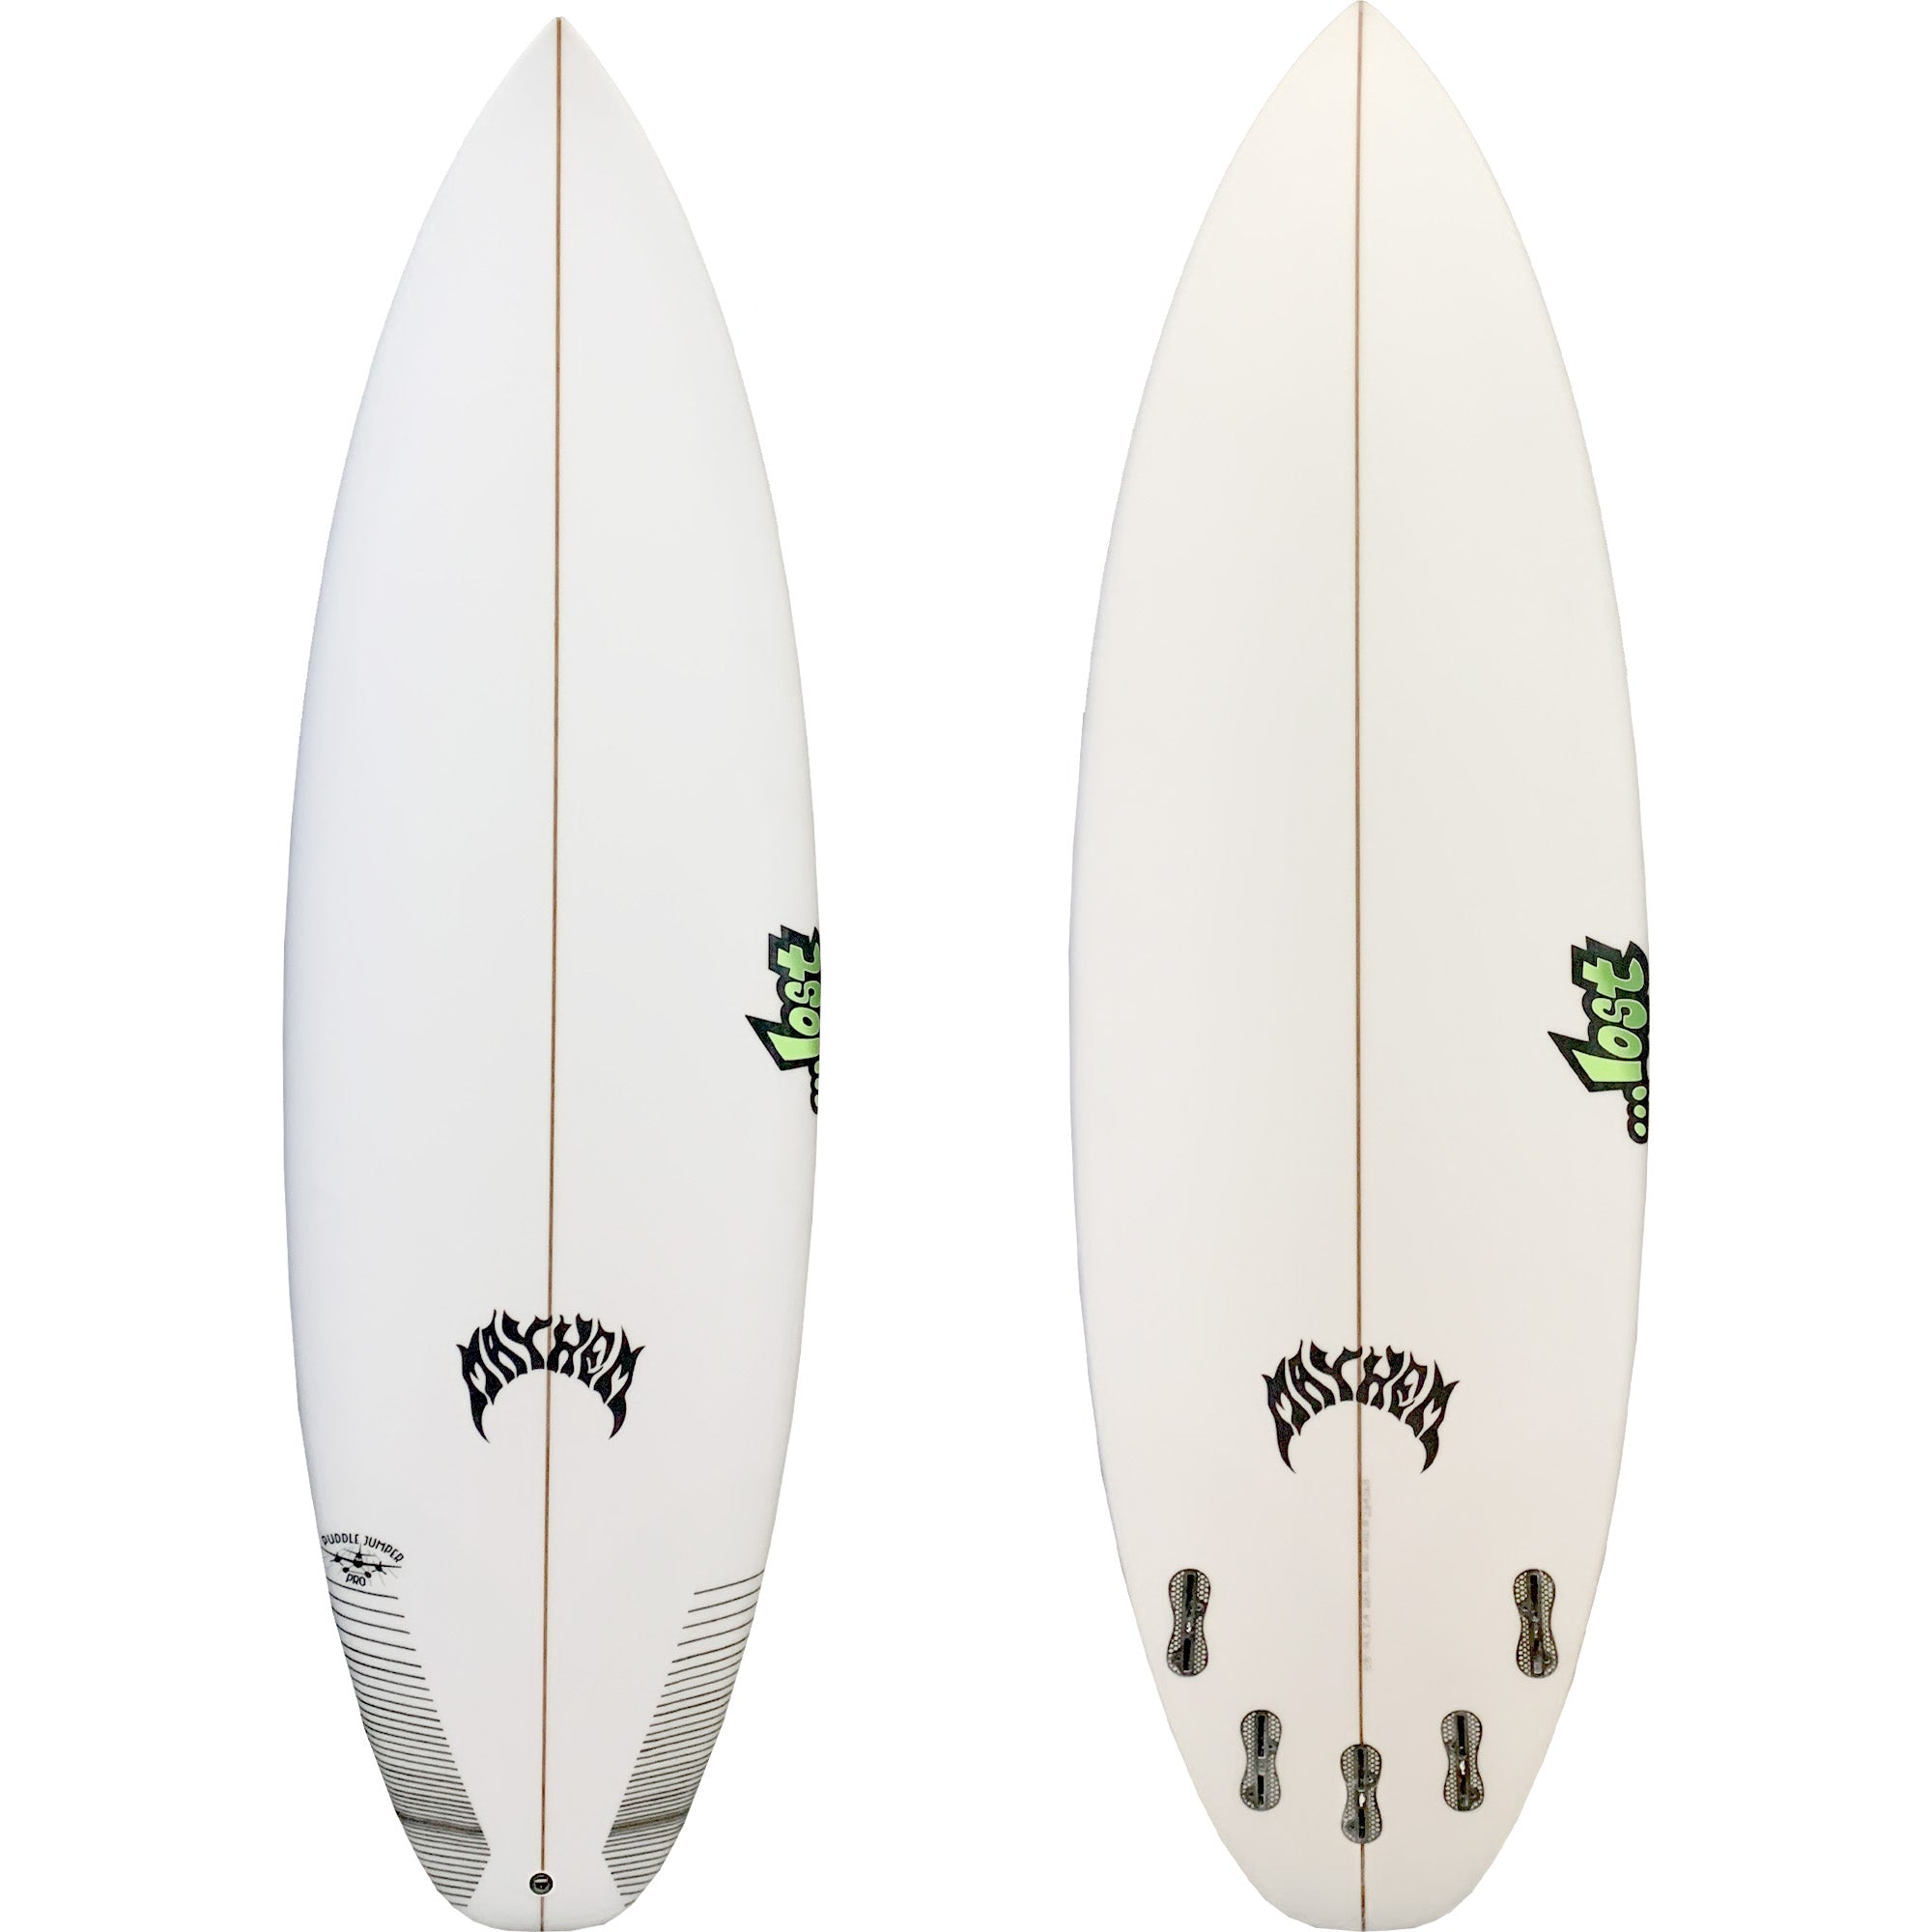 Lost Puddle Jumper Pro Surfboard - FCS II